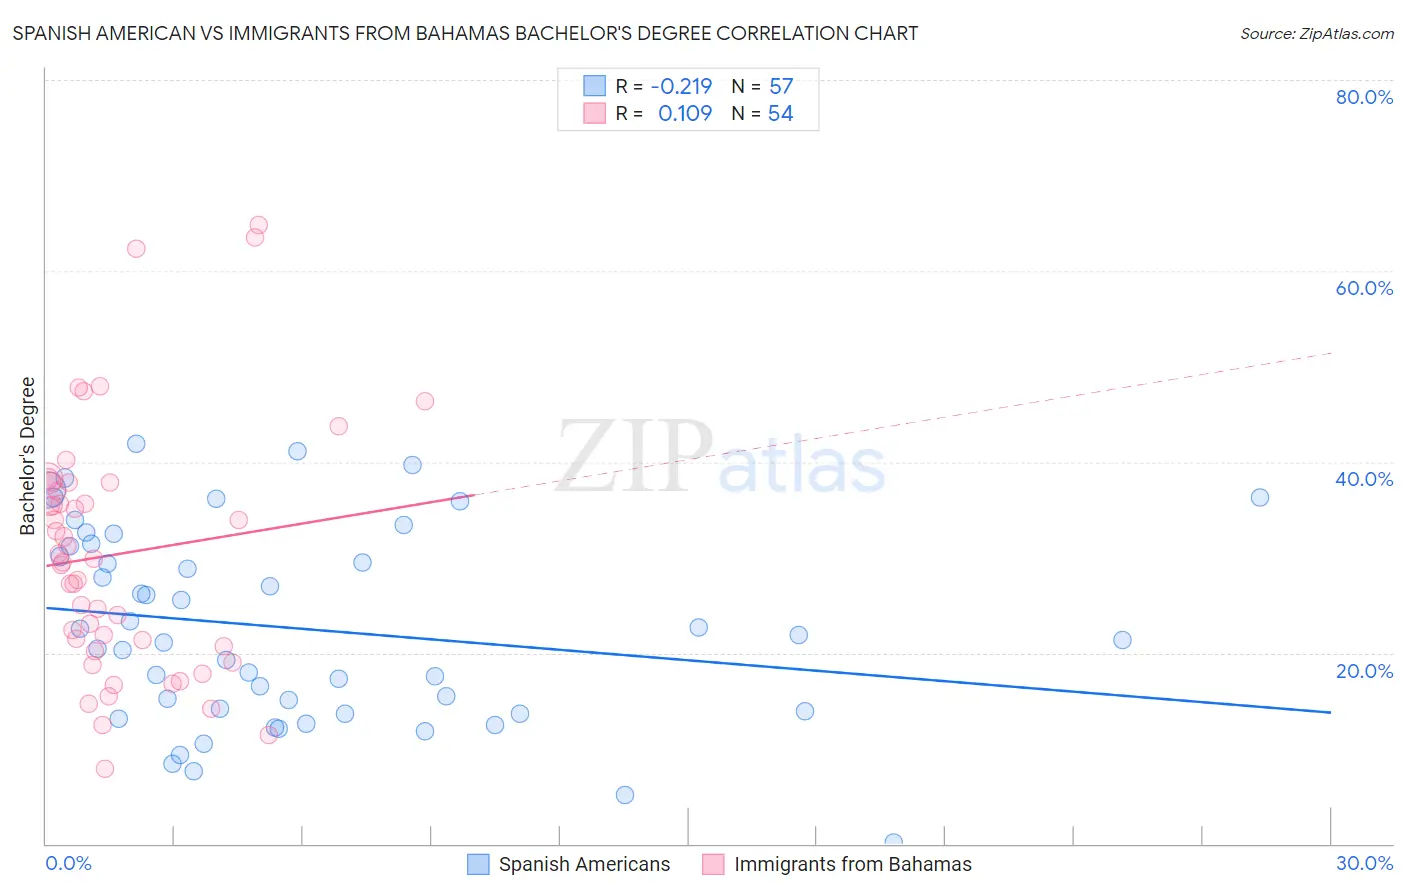 Spanish American vs Immigrants from Bahamas Bachelor's Degree